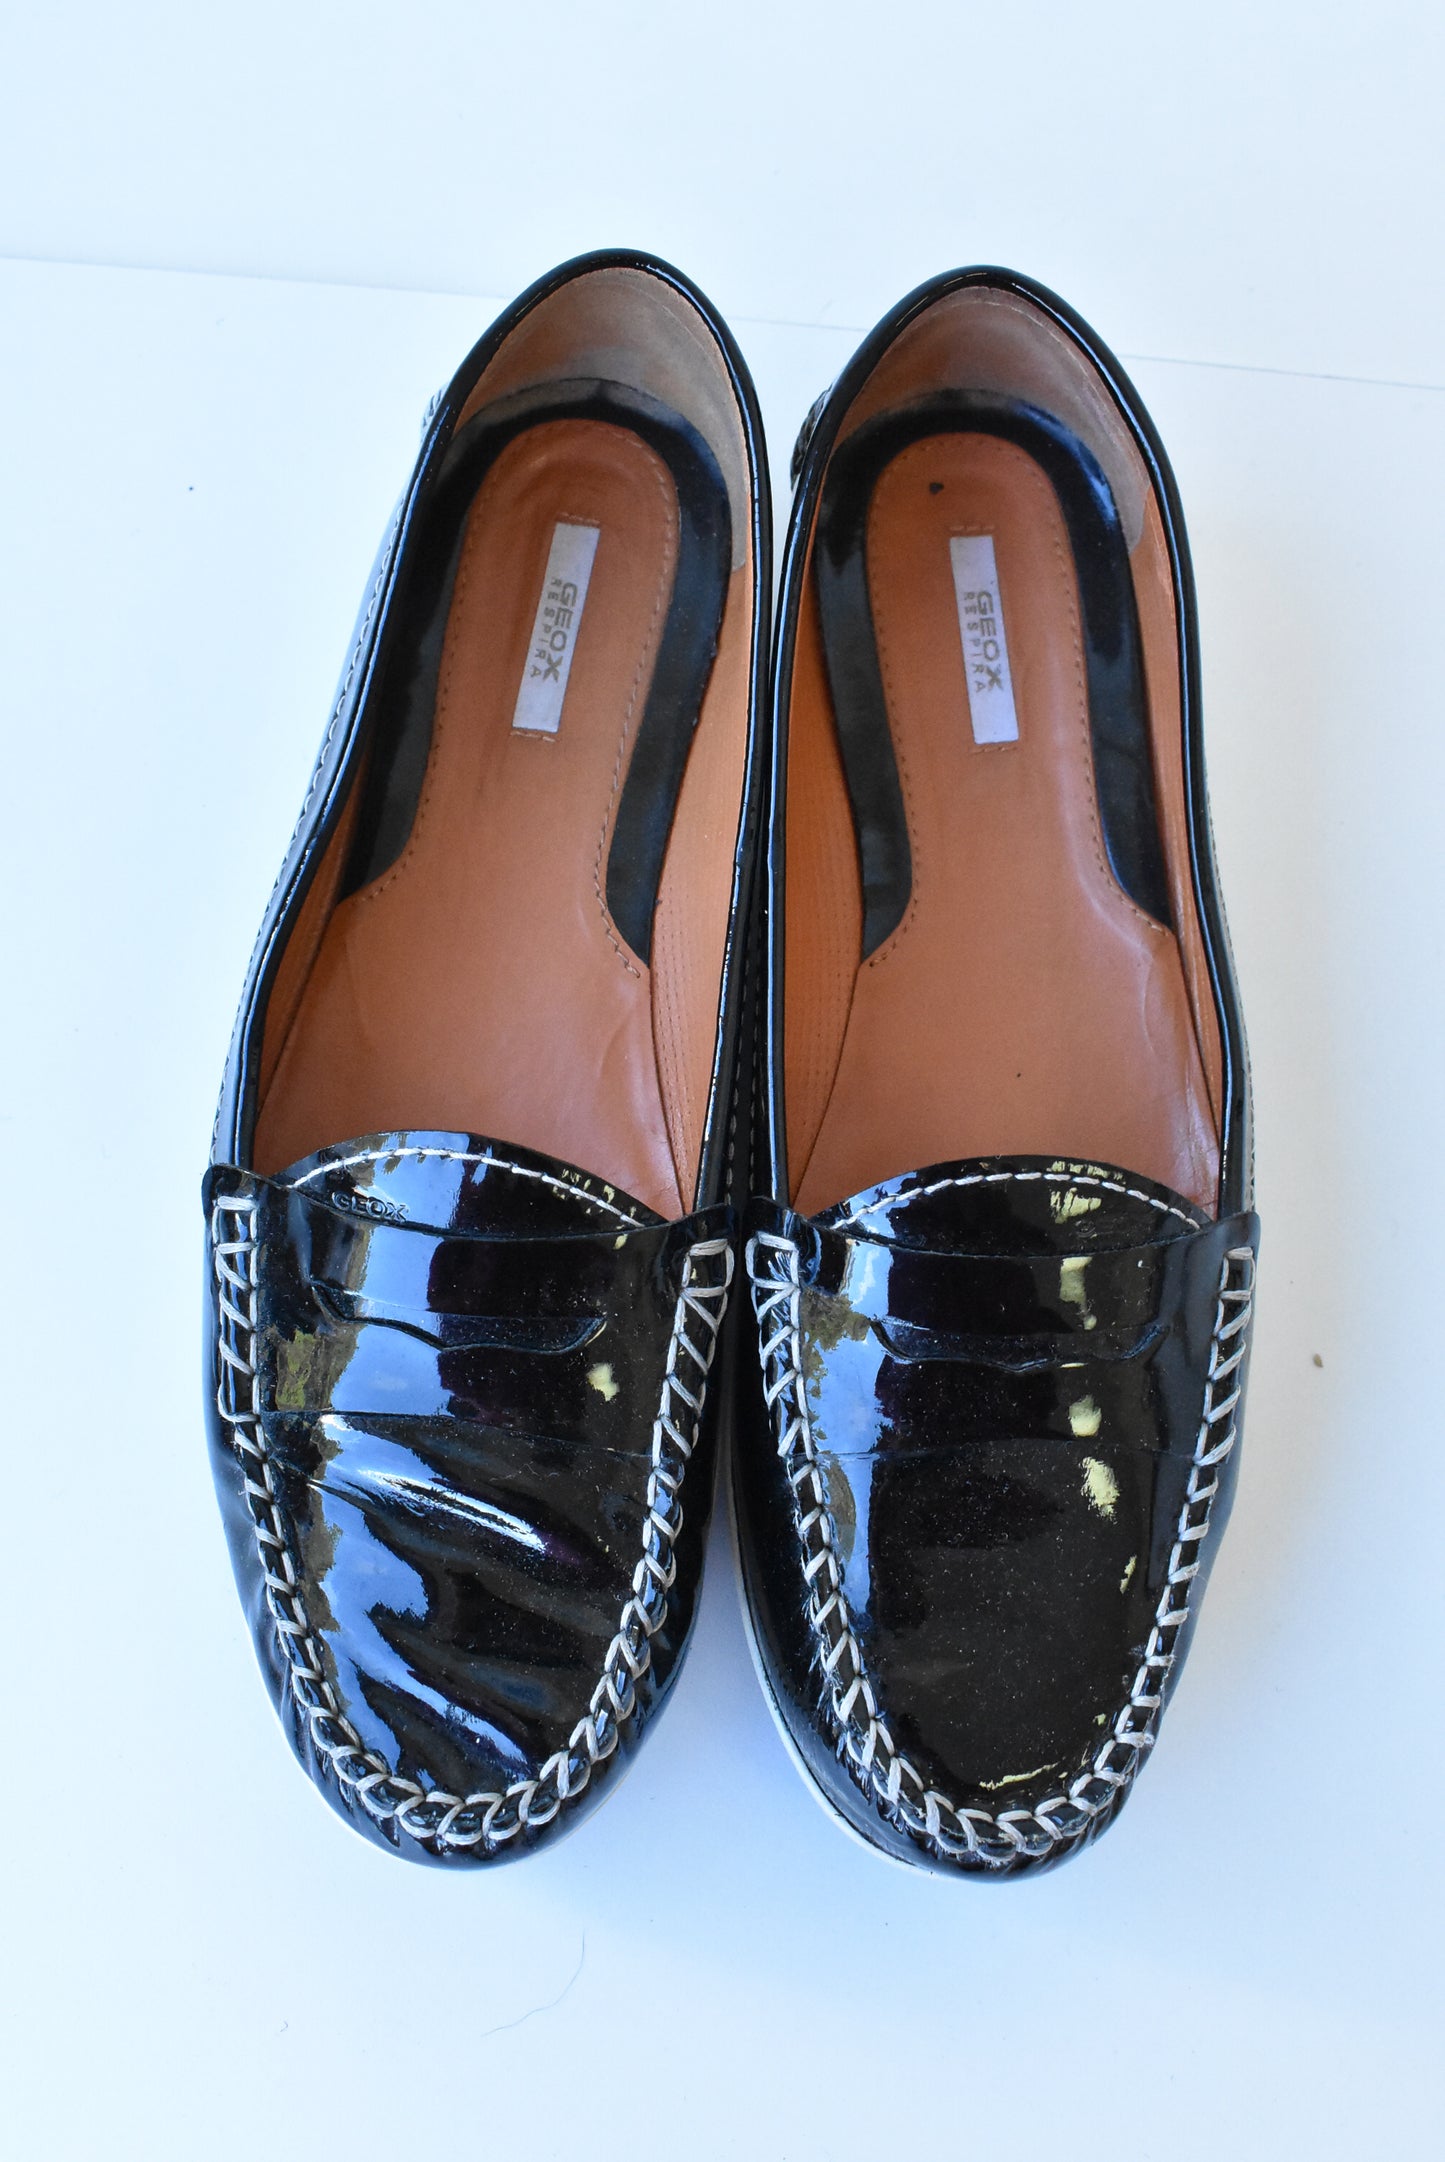 Geox Black patent leather shoes Sz 40